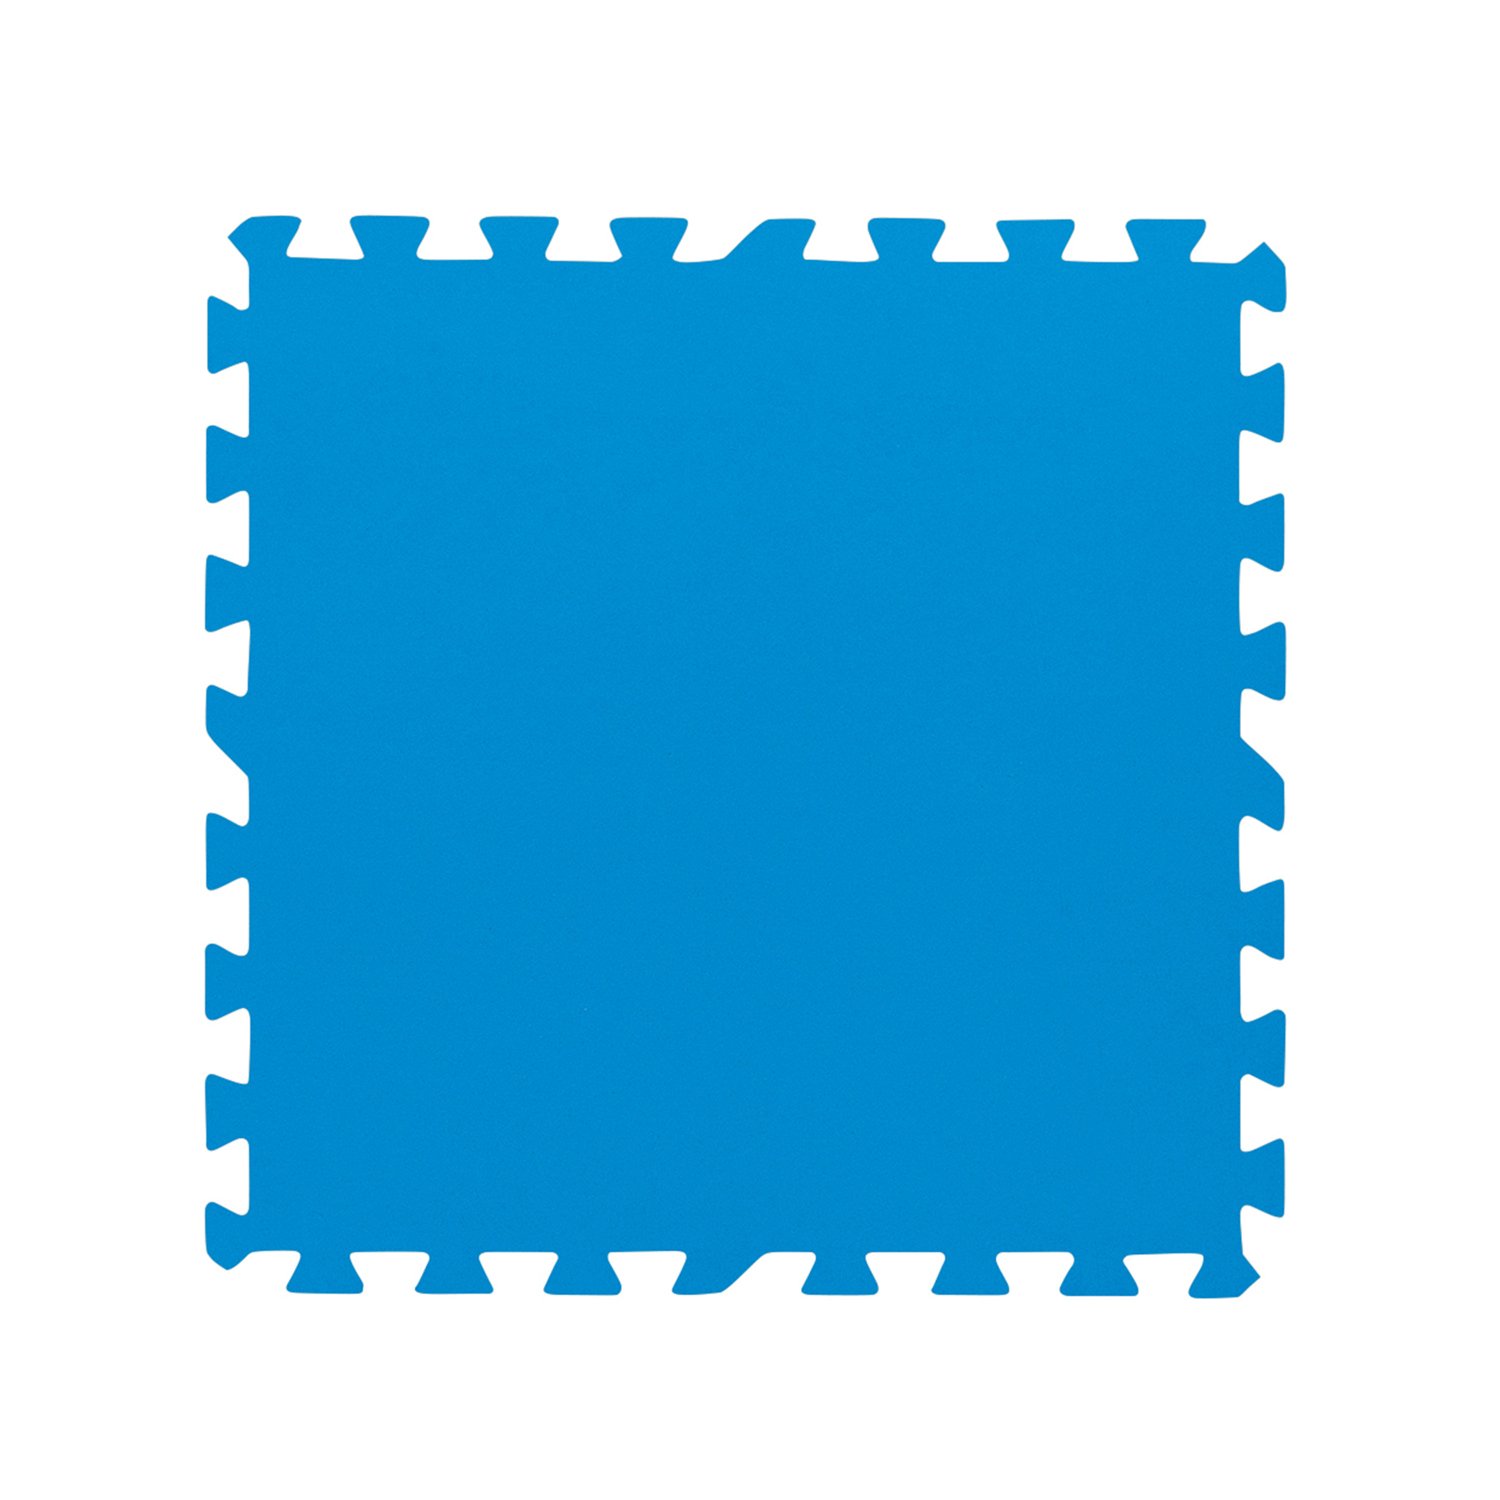 Pool-Bodenschutzfliesen Set 9 Stück,a50 x 50 cm, blau 58220_24